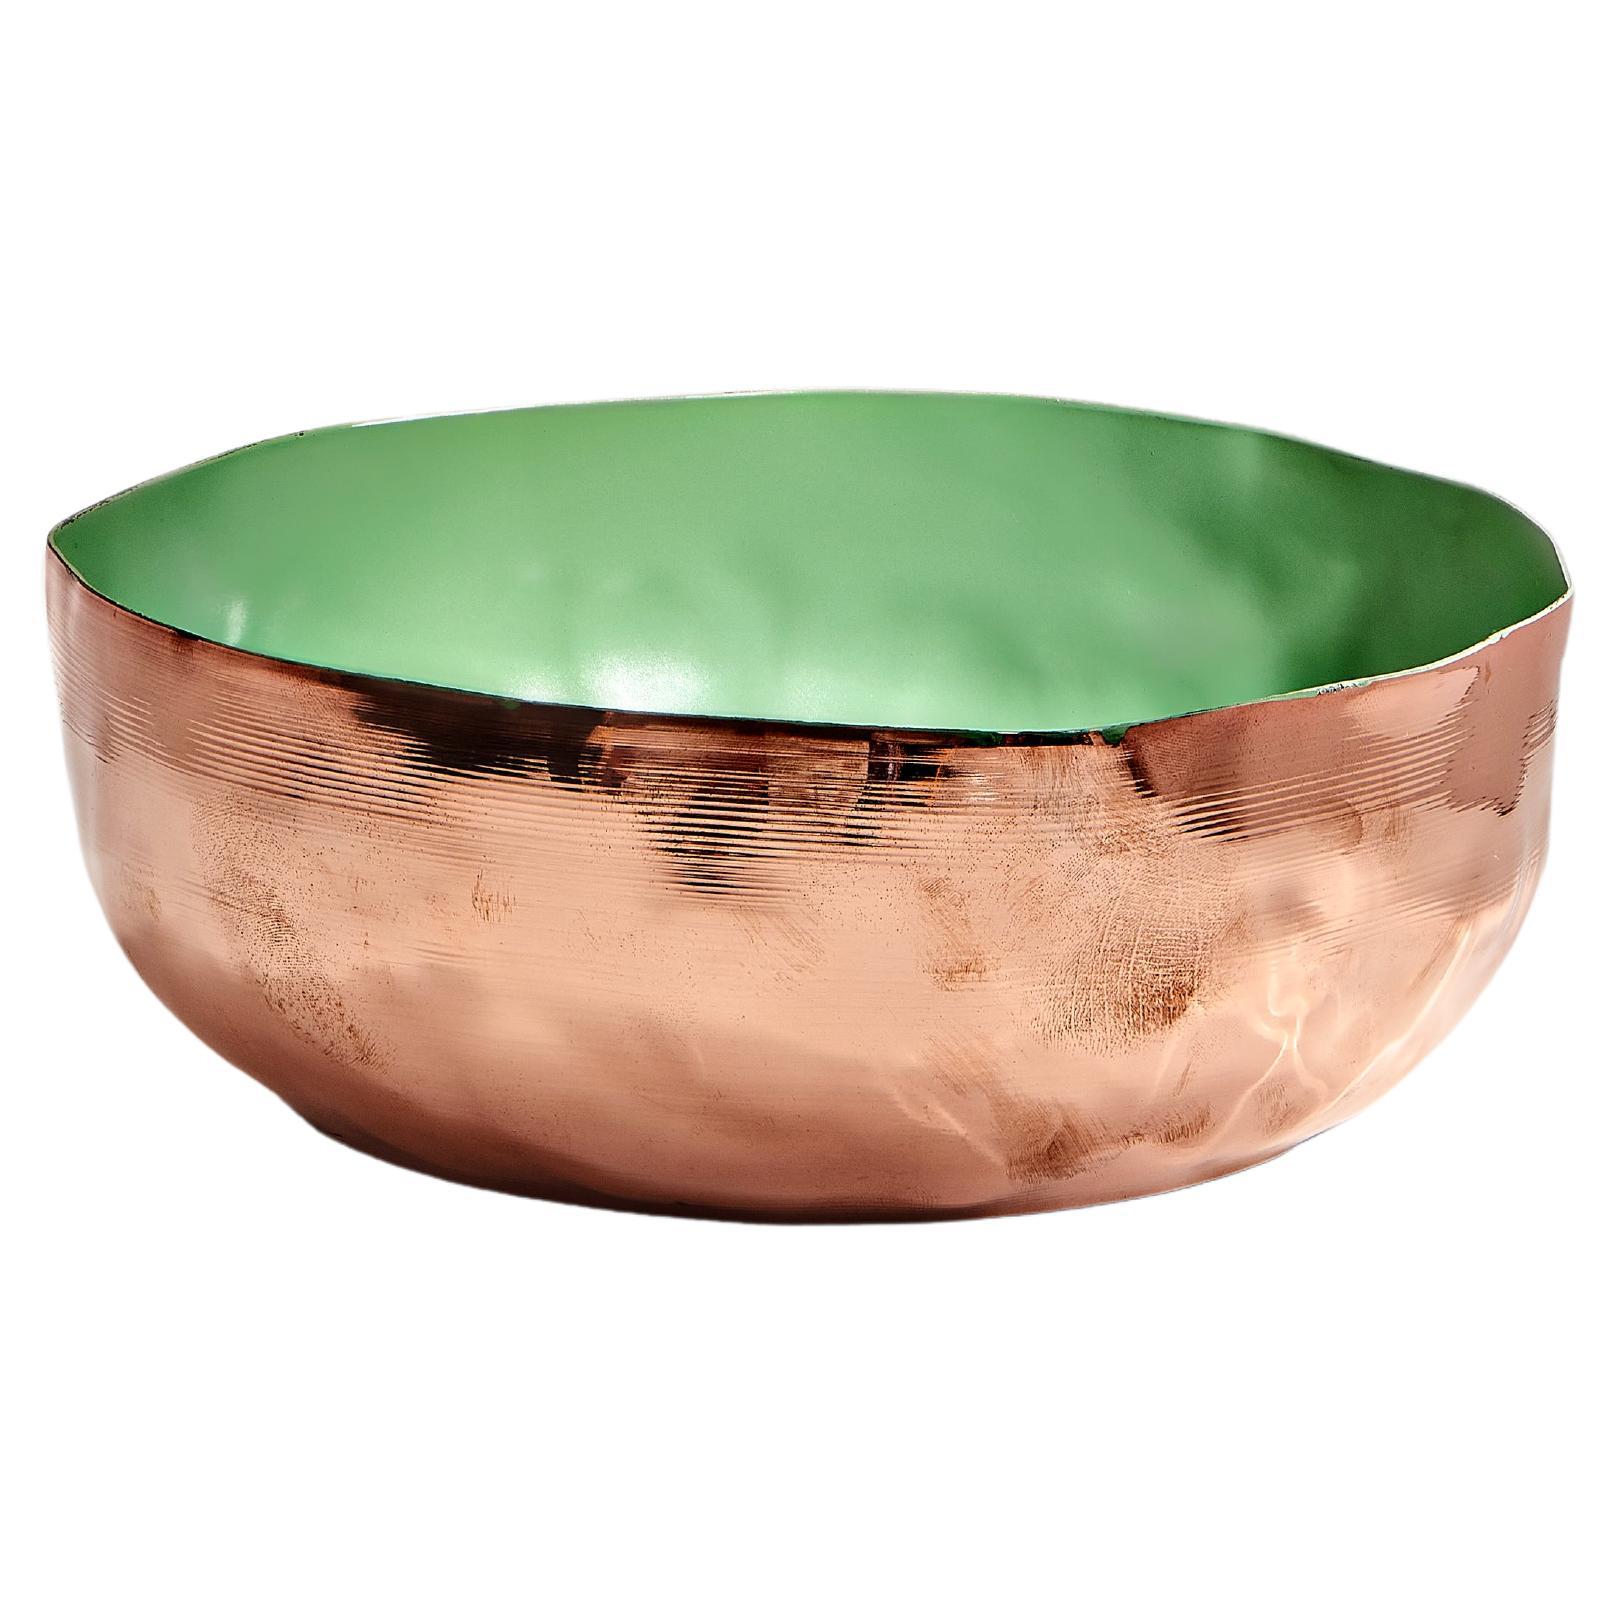 Momento Handmade Colourful Bowl by Jordan Keaney - Copper